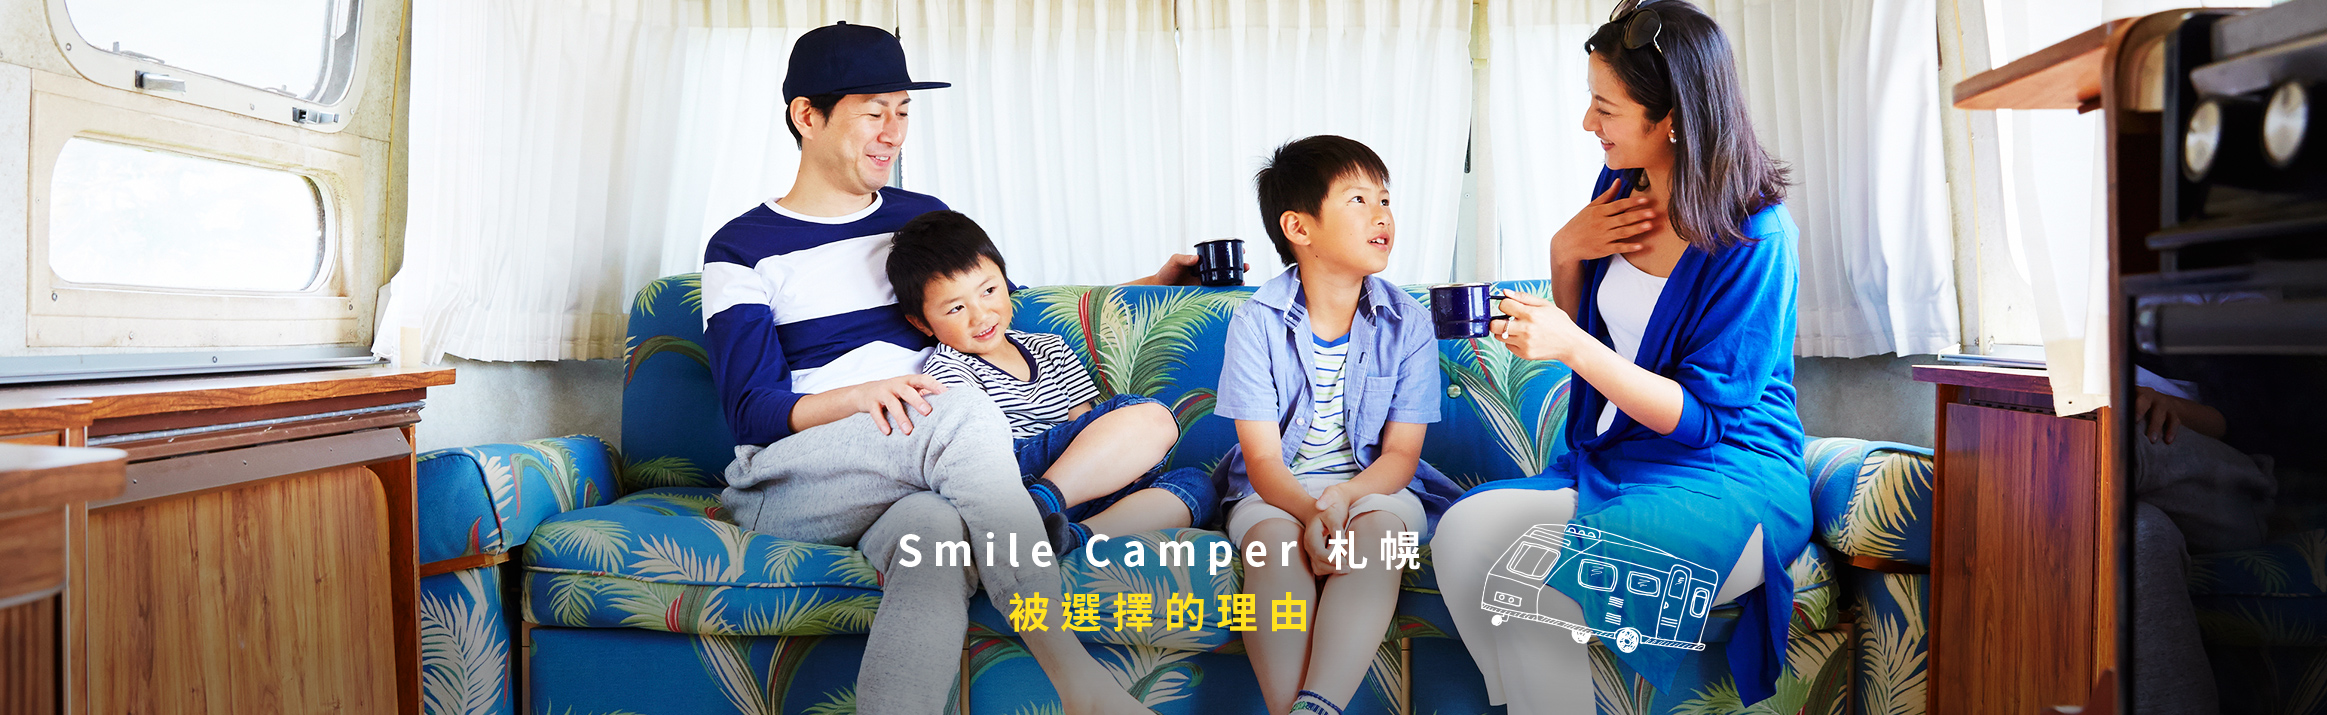 Smile Camper札幌 被選擇的理由